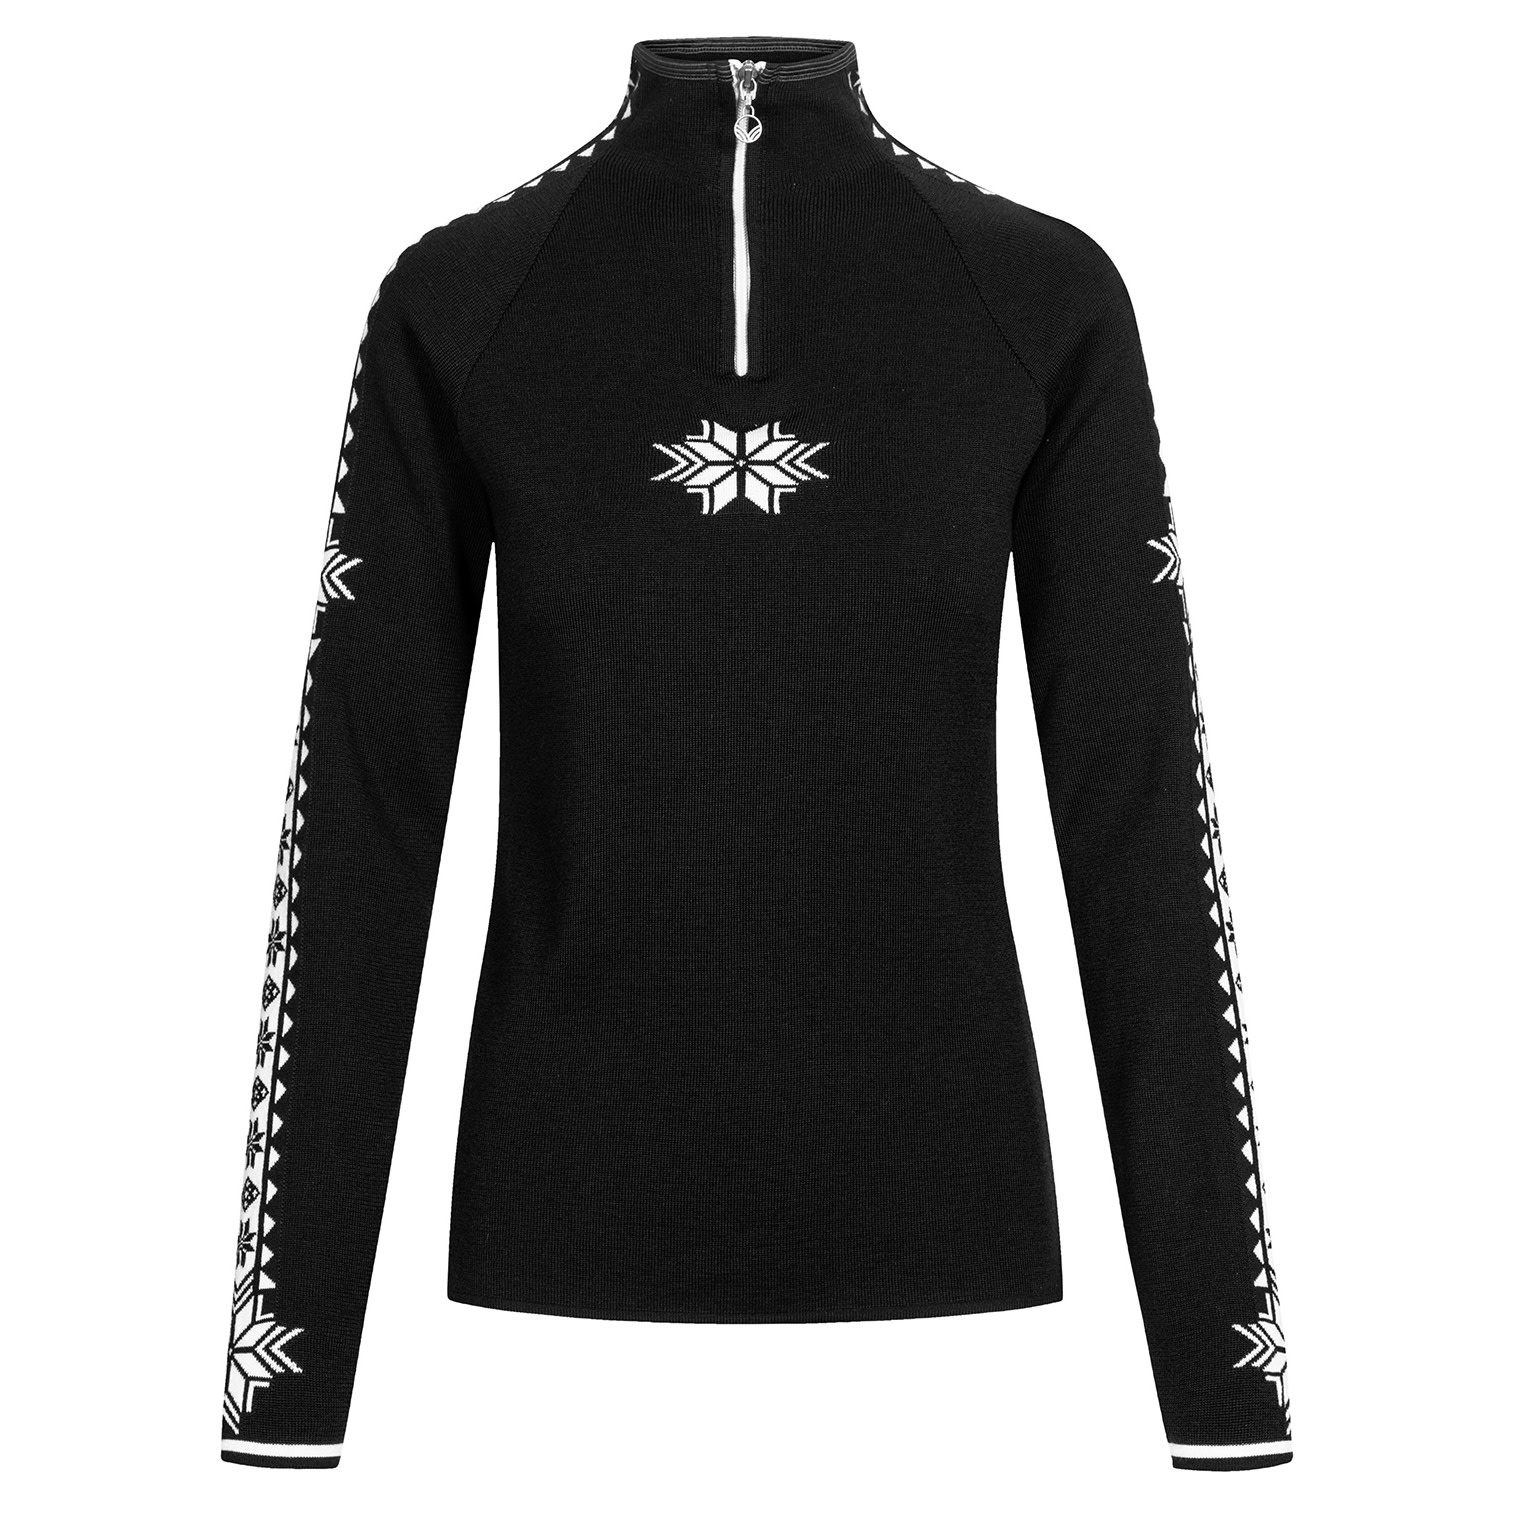 Geilo Women's Sweater black/off white